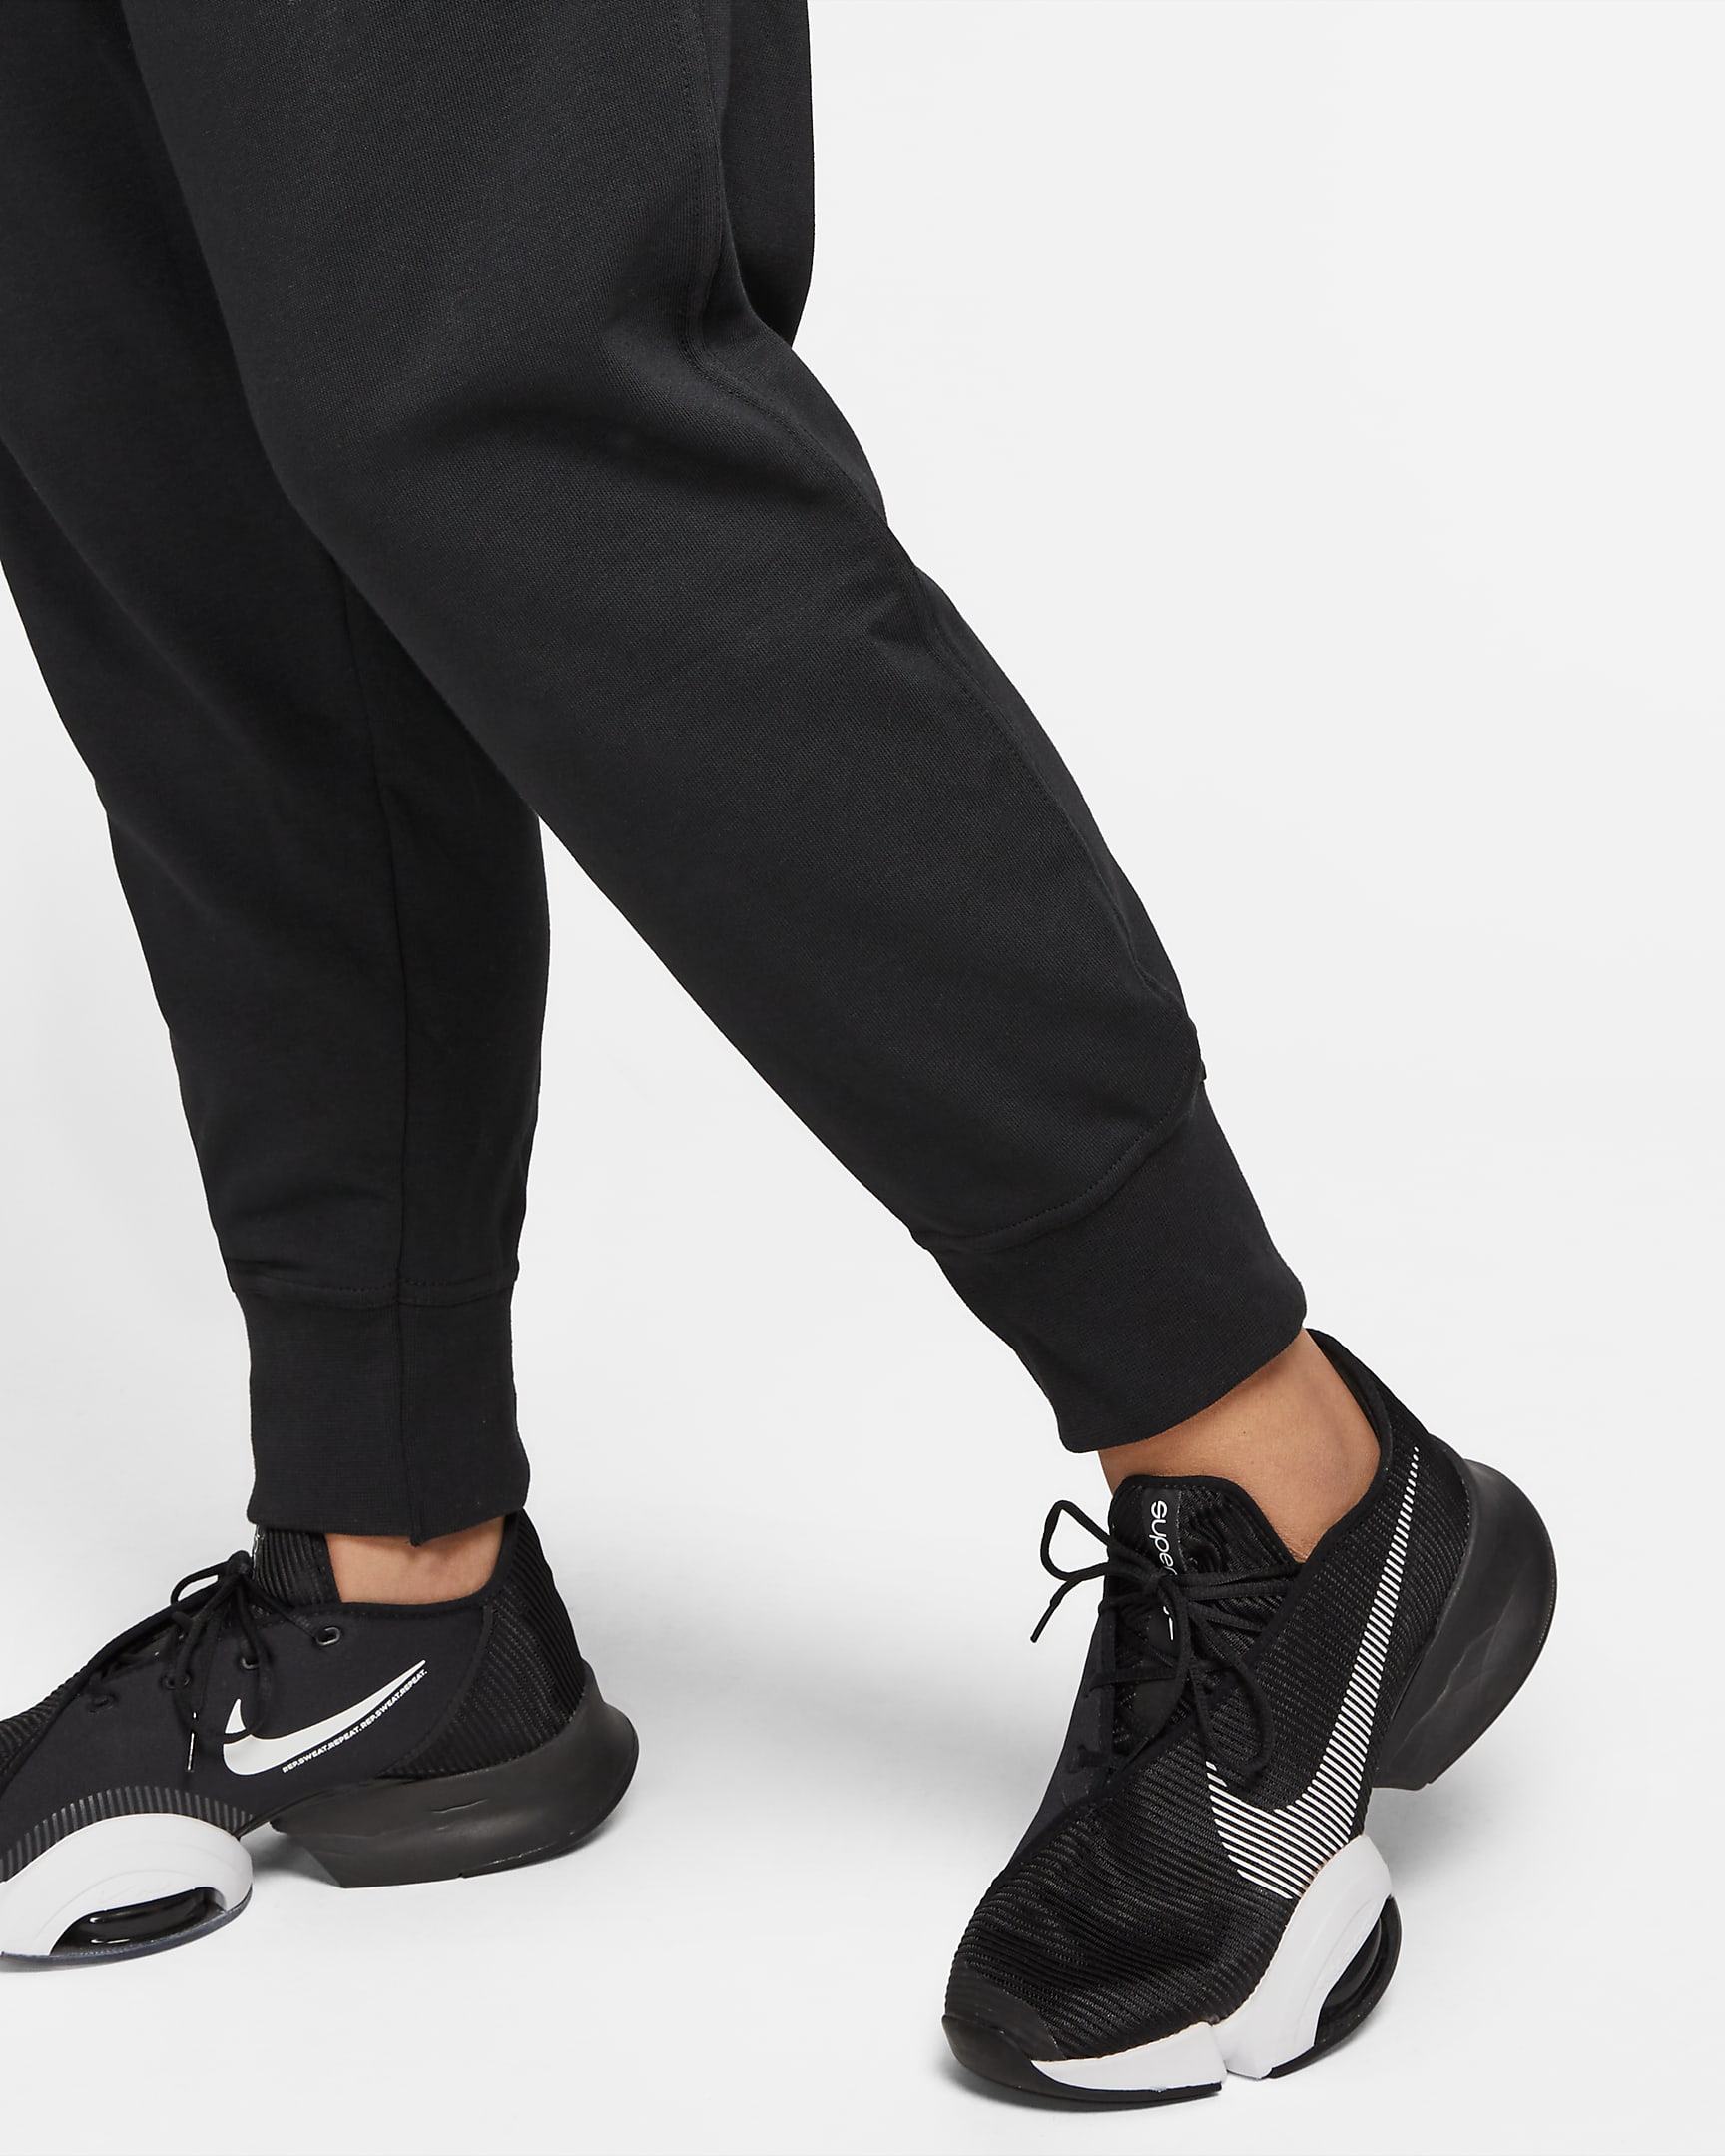 Nike Dri-FIT Get Fit Women's Training Pants (Plus Size). Nike.com